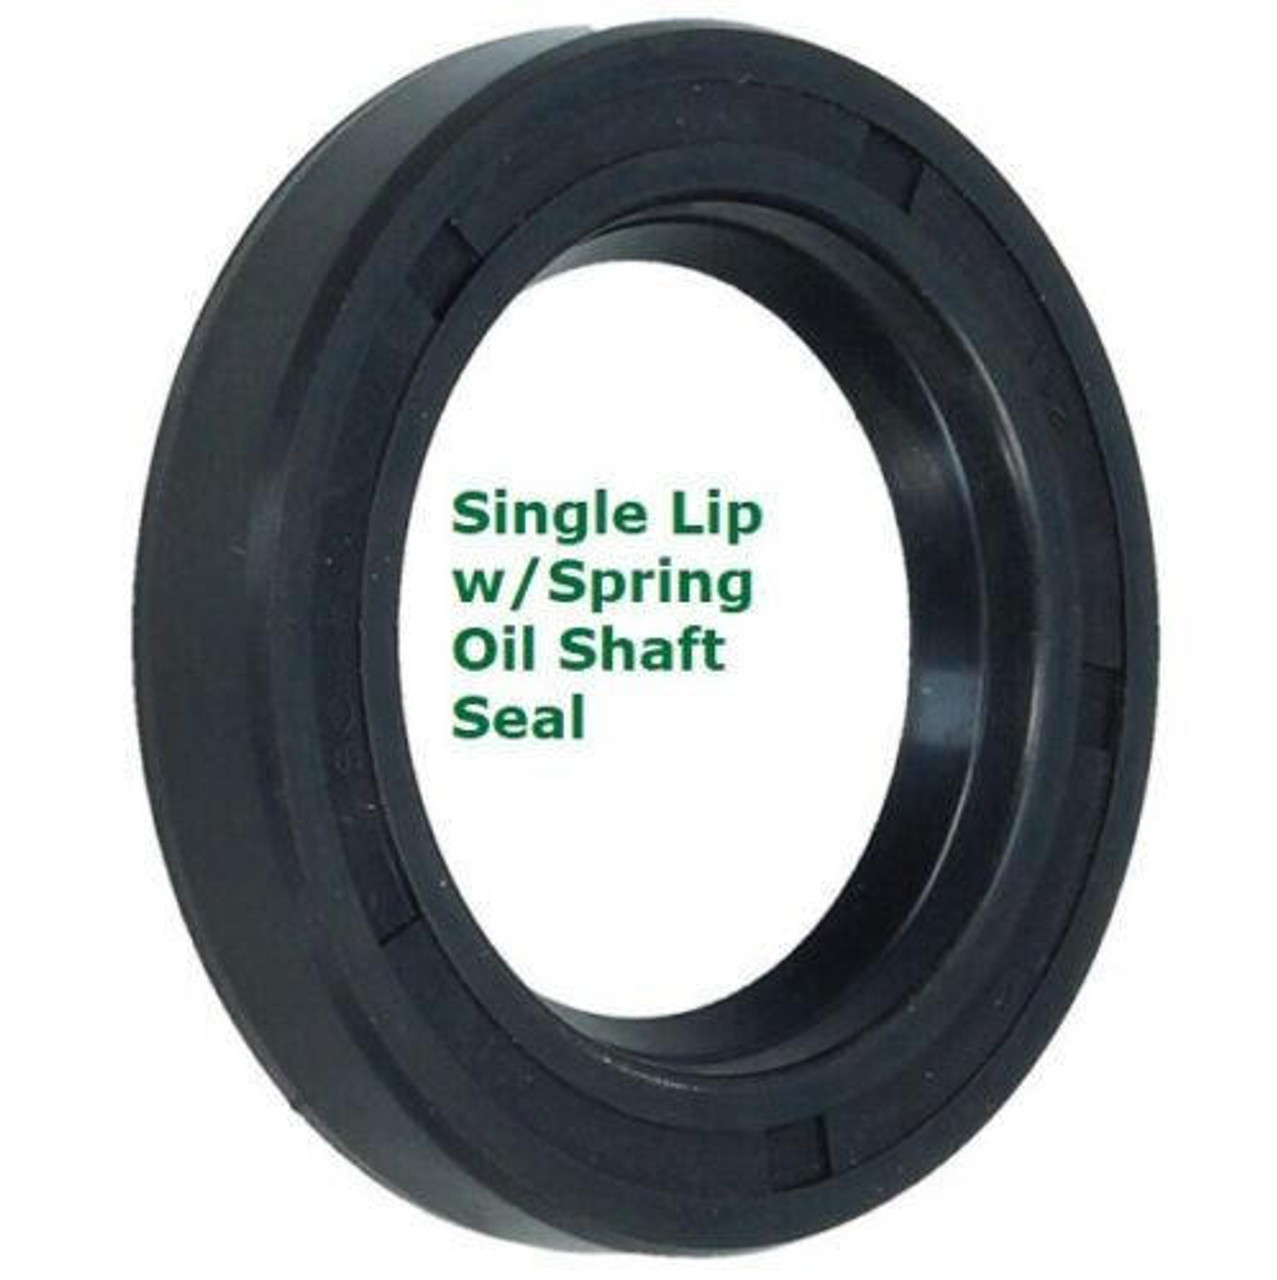 Metric Oil Shaft Seal 150 x 180 x 12mm Single Lip   Price for 1 pc